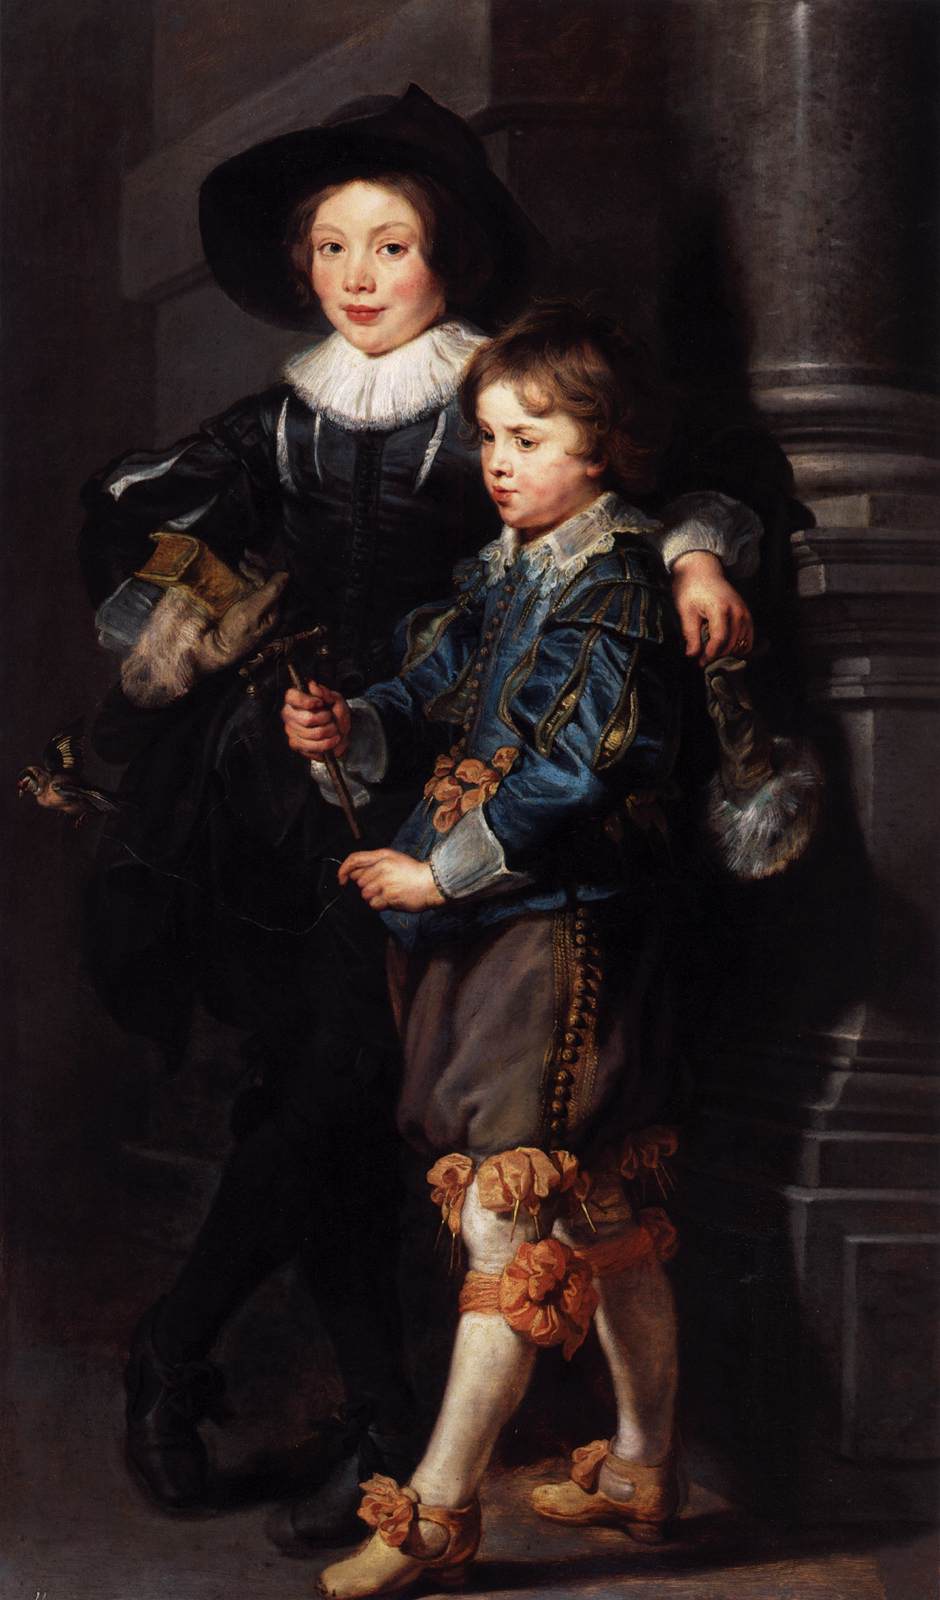 Alberto and Nicholas Rubens